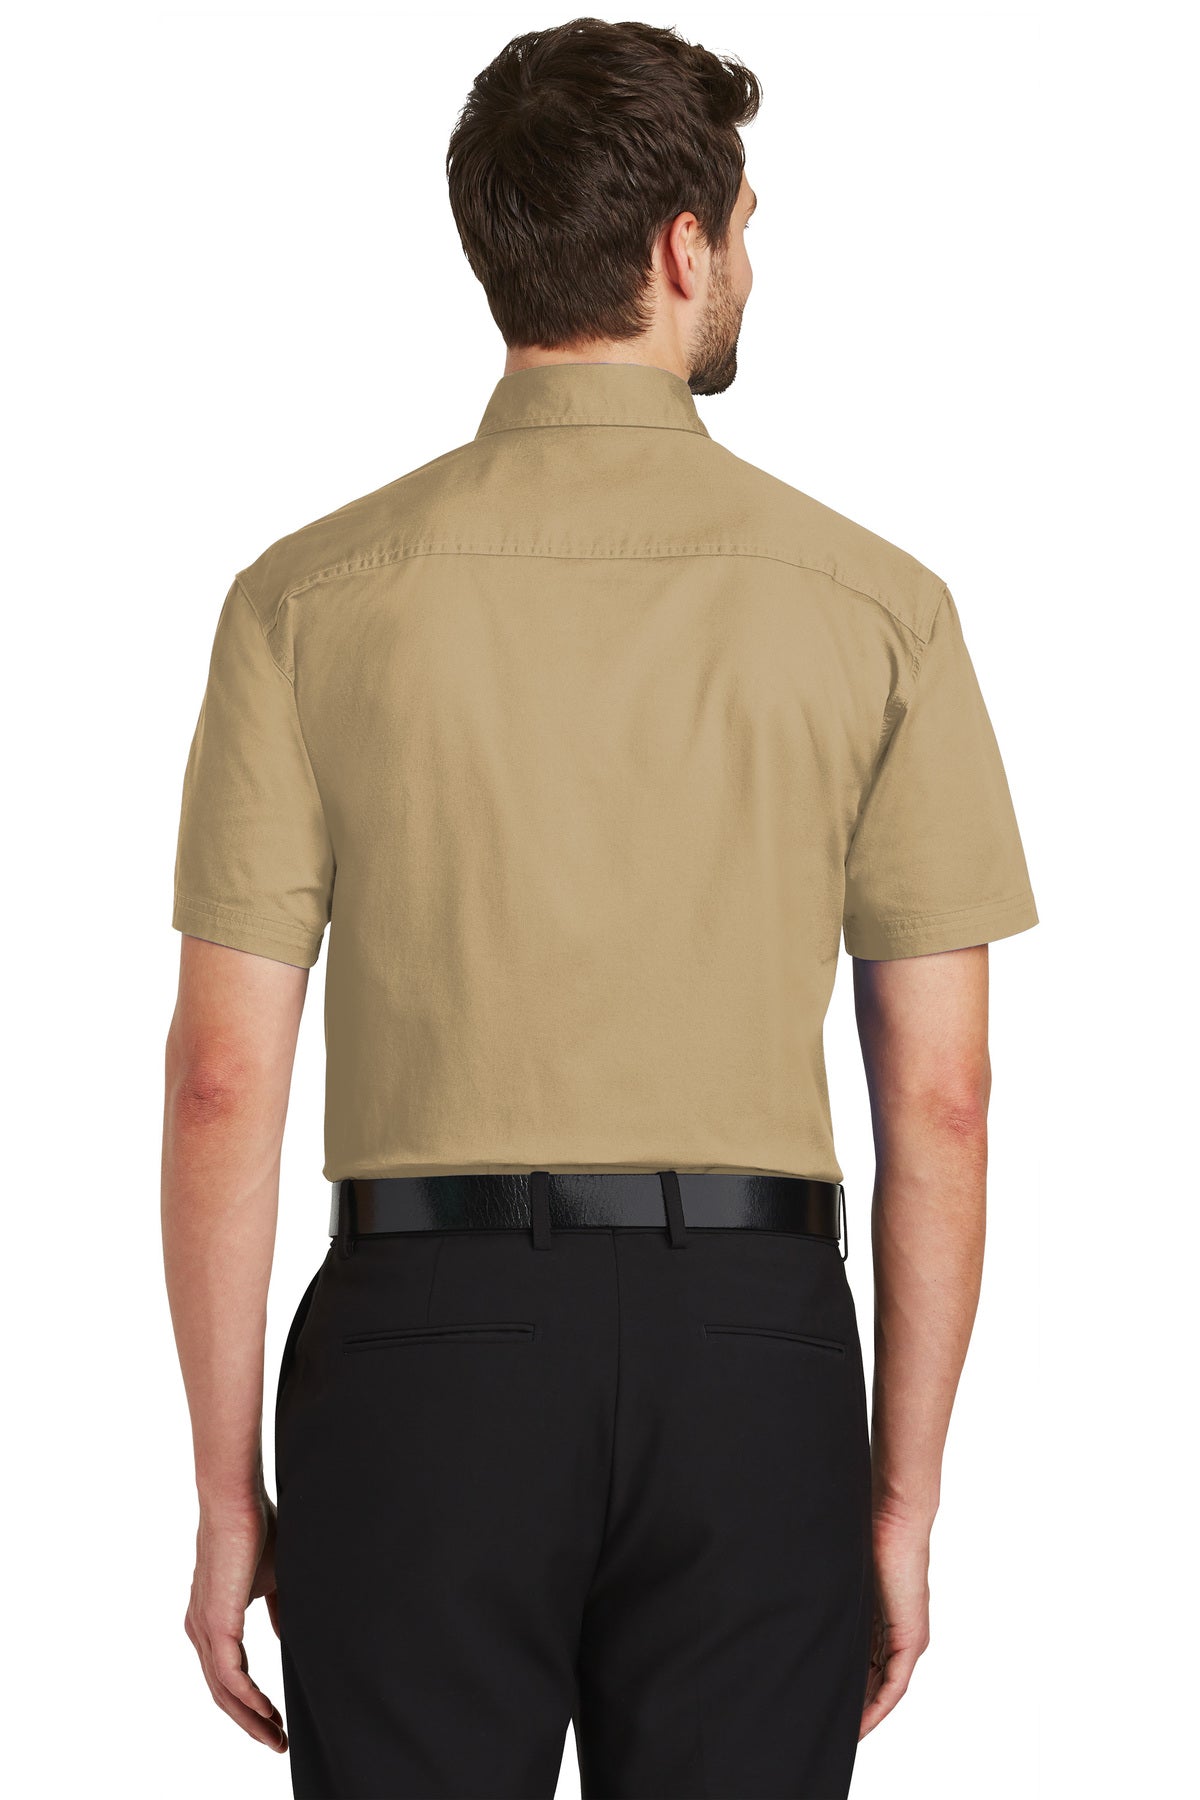 Port Authority Short Sleeve Custom Twill Shirts, Khaki